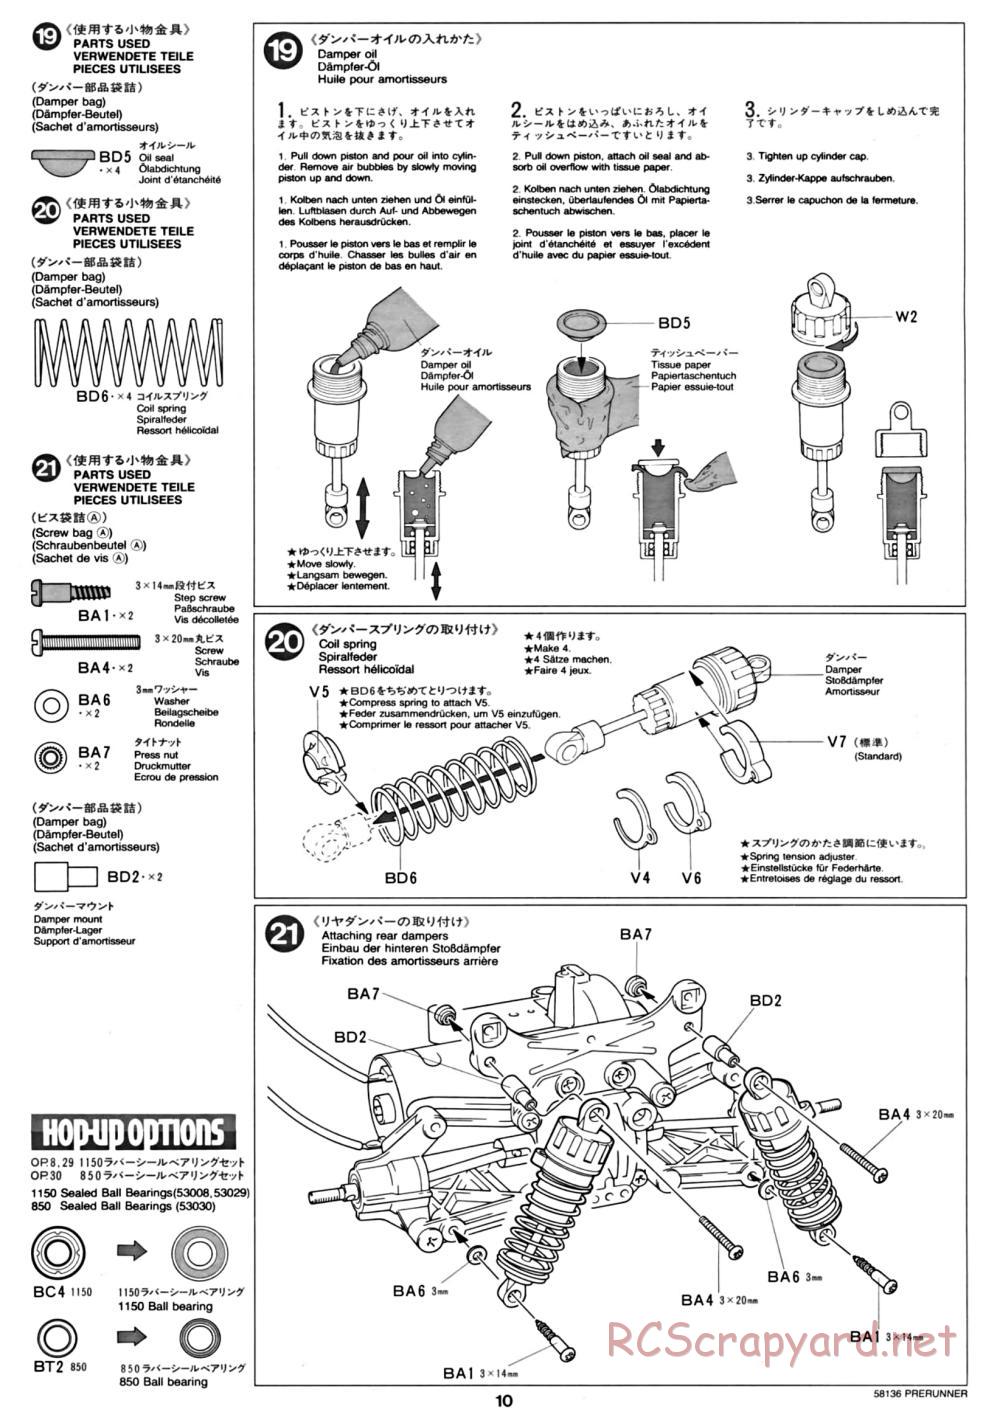 Tamiya - Toyota Prerunner Chassis - Manual - Page 10